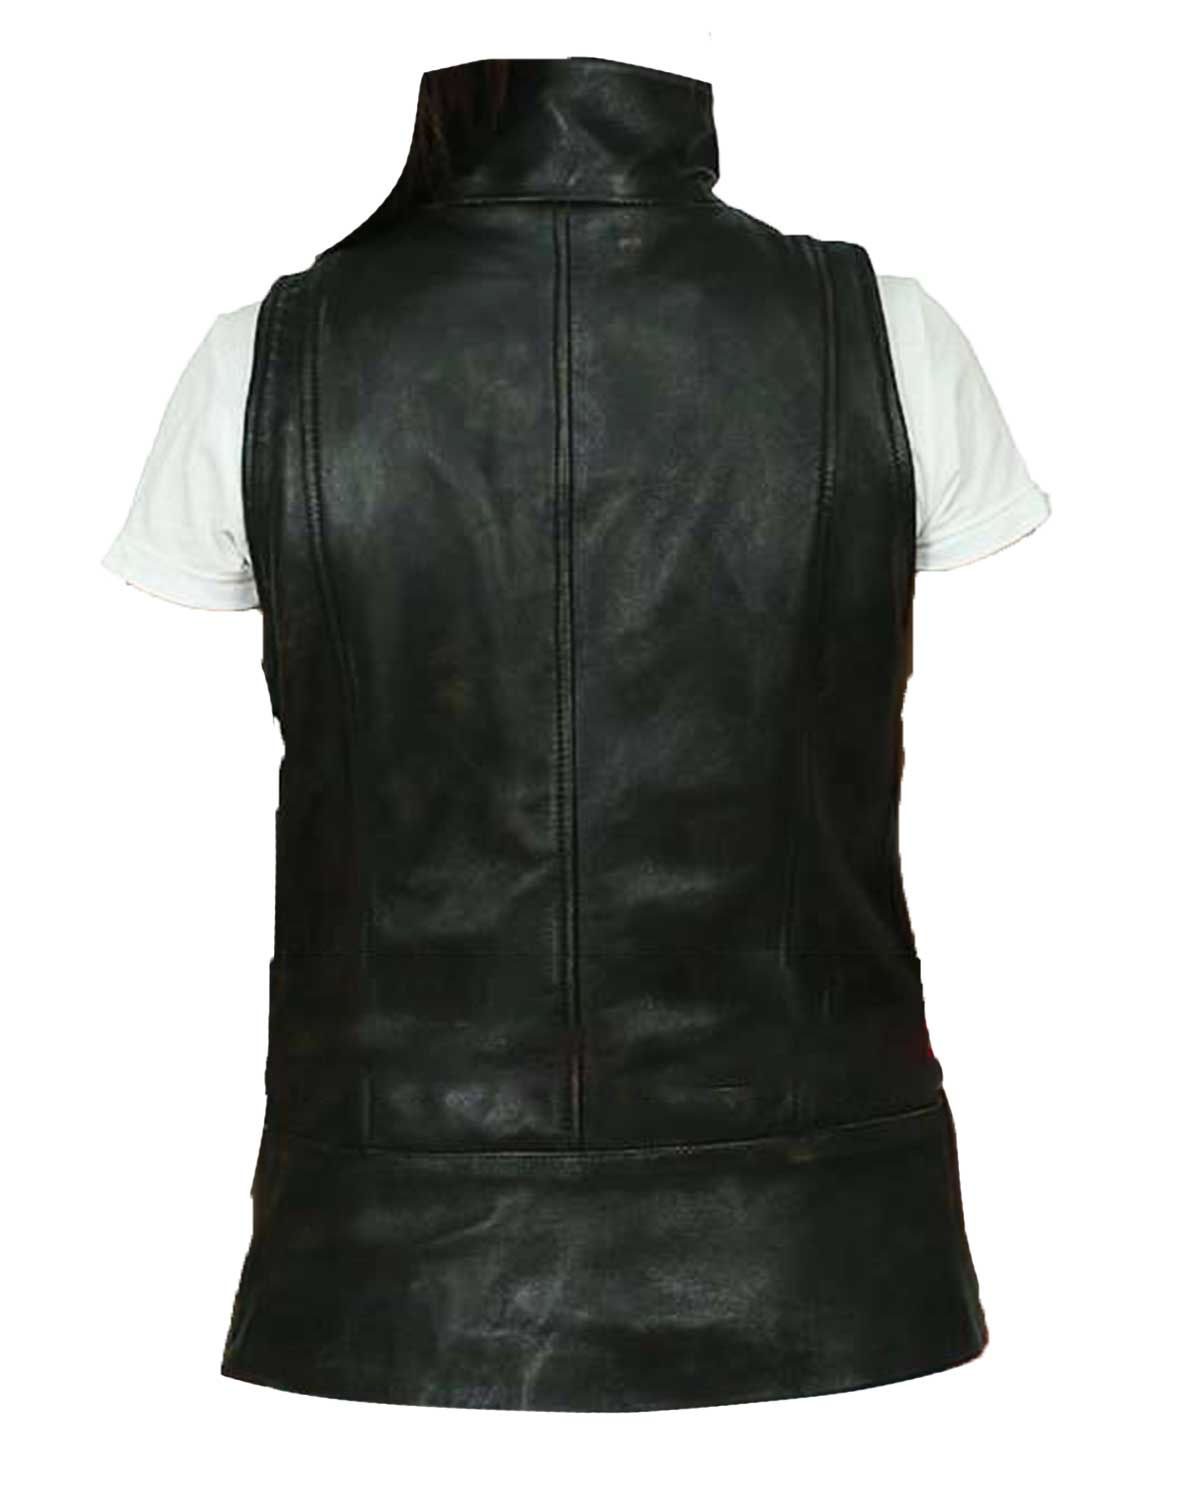 Shailene Woodley The Divergent Allegiant Green Leather Vest